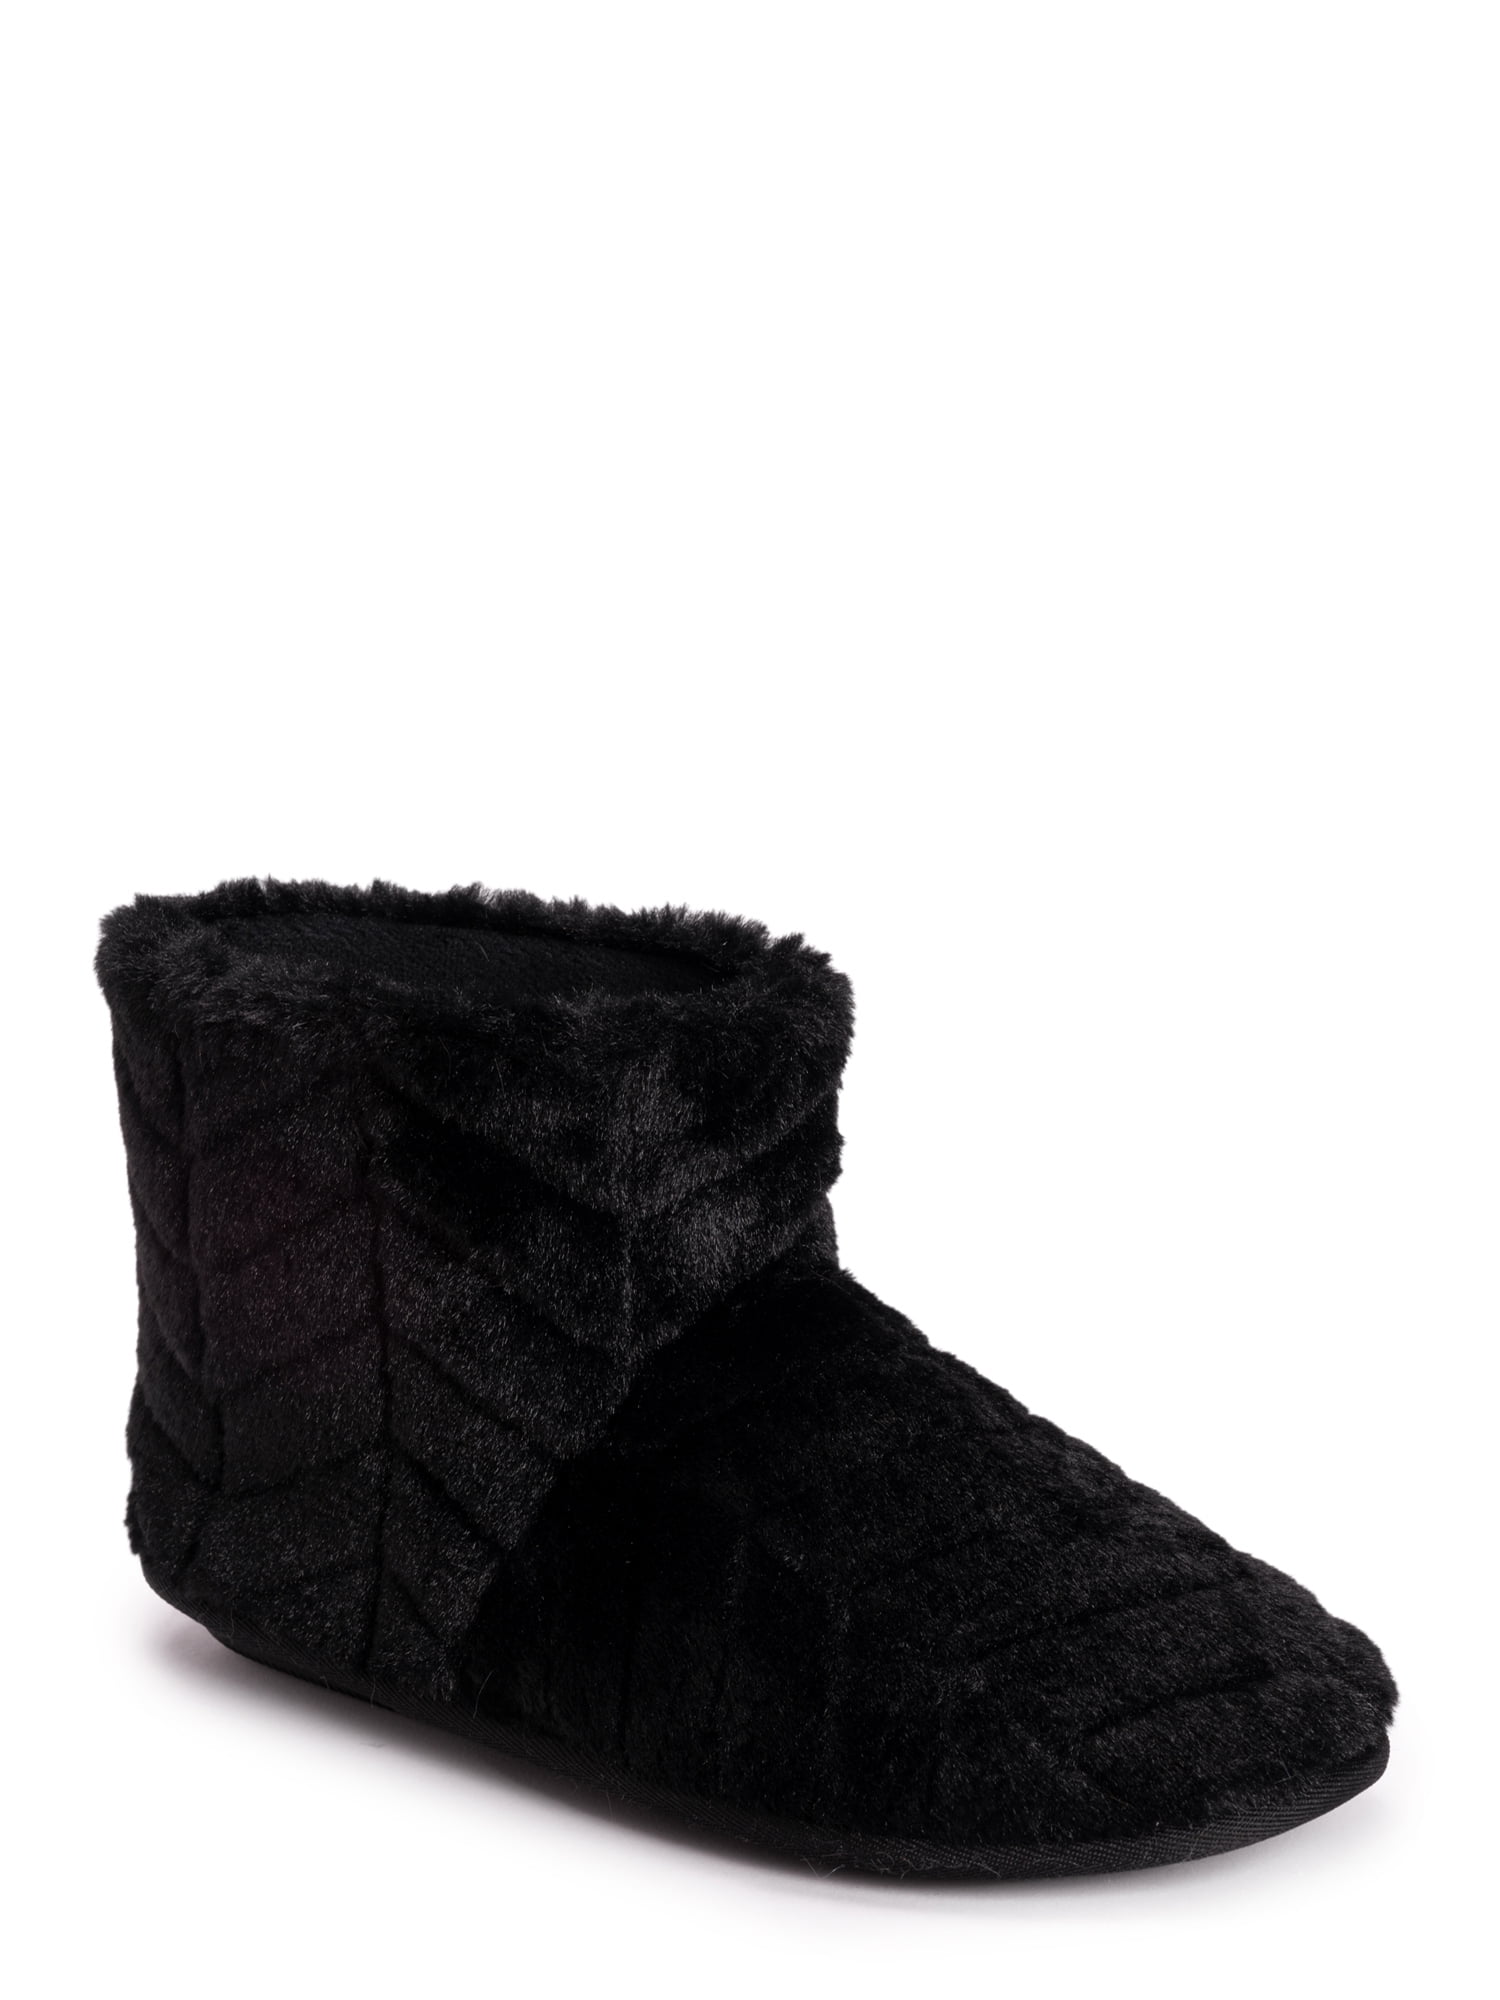 L NWT Women's Knit Zigzag Chevron Print Boot Booties Slippers M 7/8 9/10 